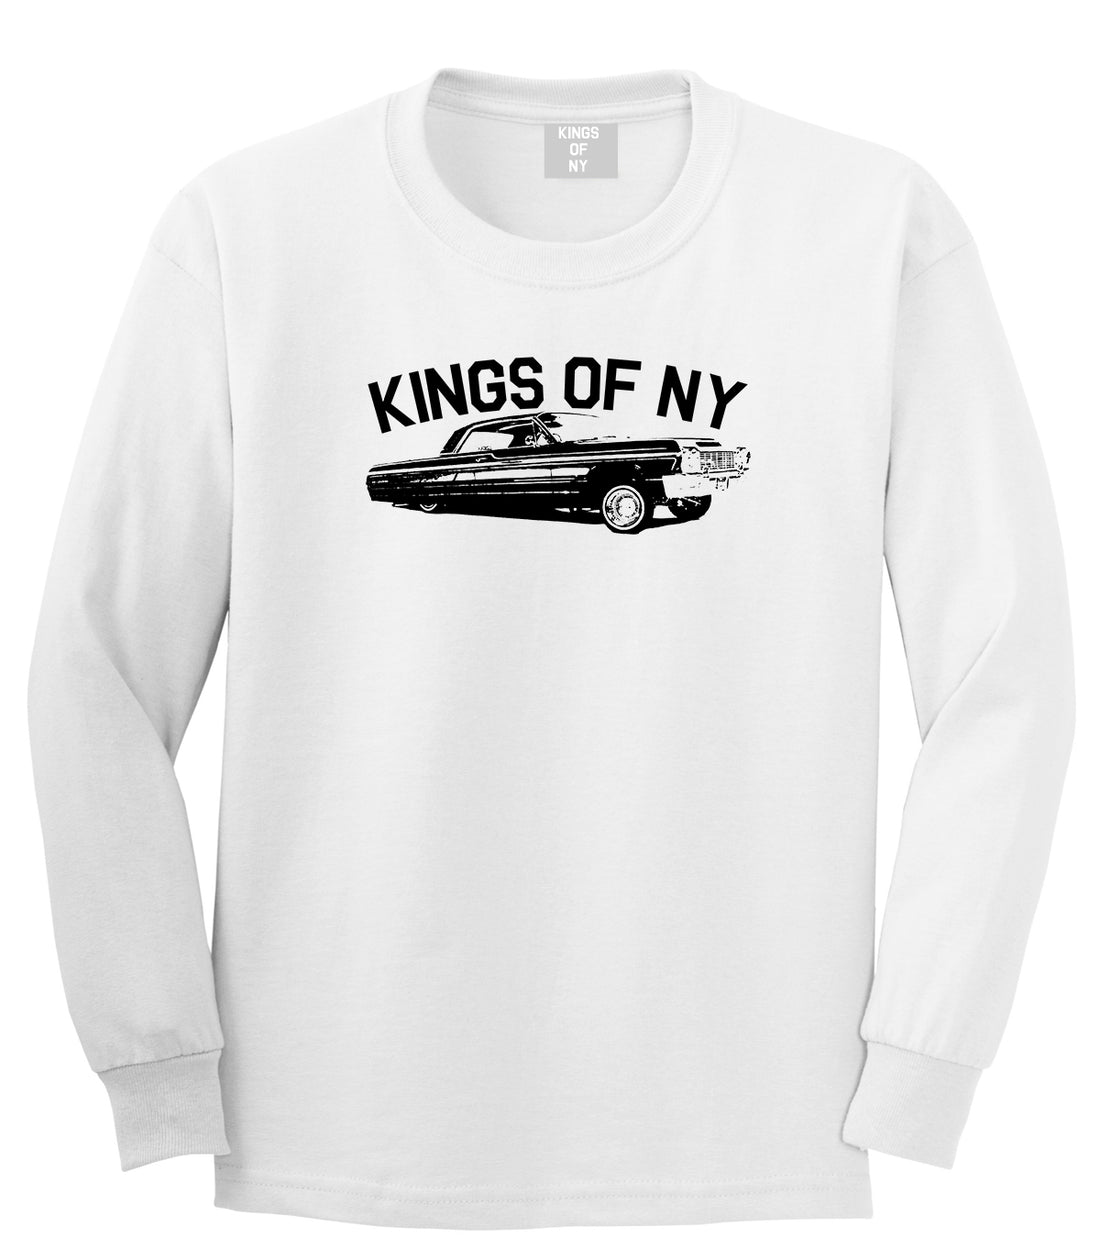 Kings Of NY Lowrider Mens Long Sleeve T-Shirt White by Kings Of NY